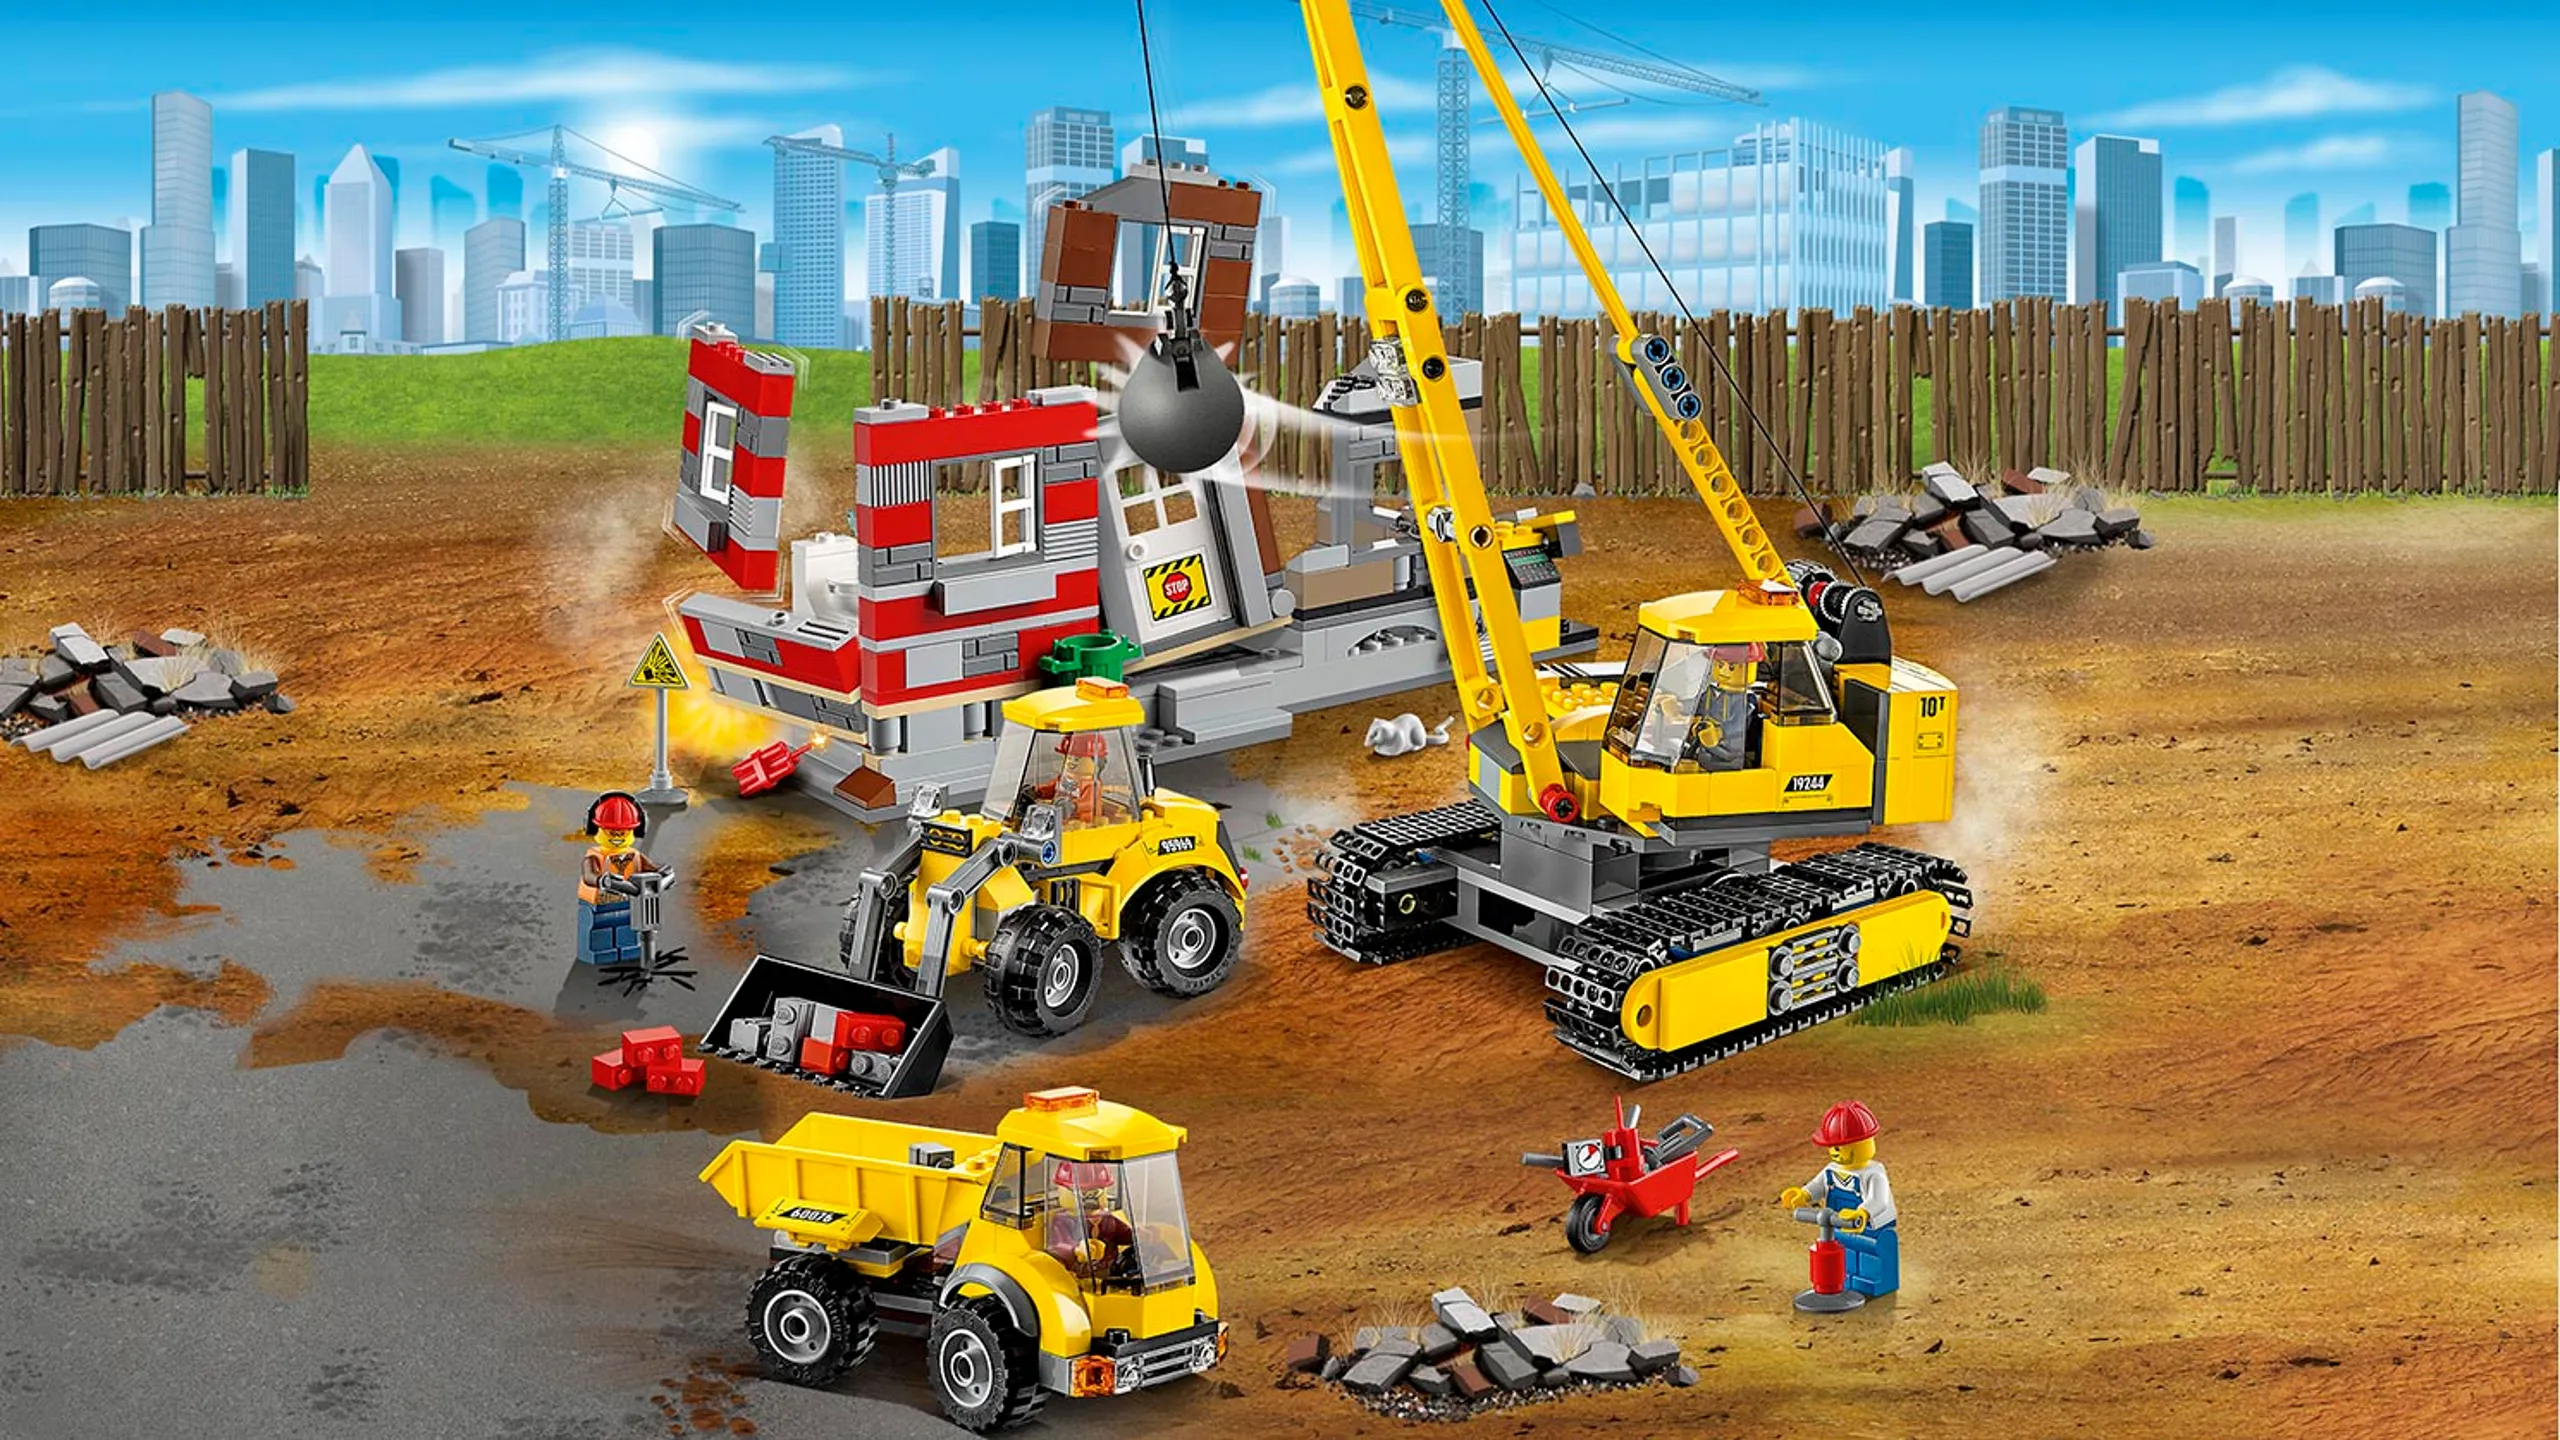 LEGO City Demolition site wrecking ball, trucks and minifigures - Demolition Site 60076